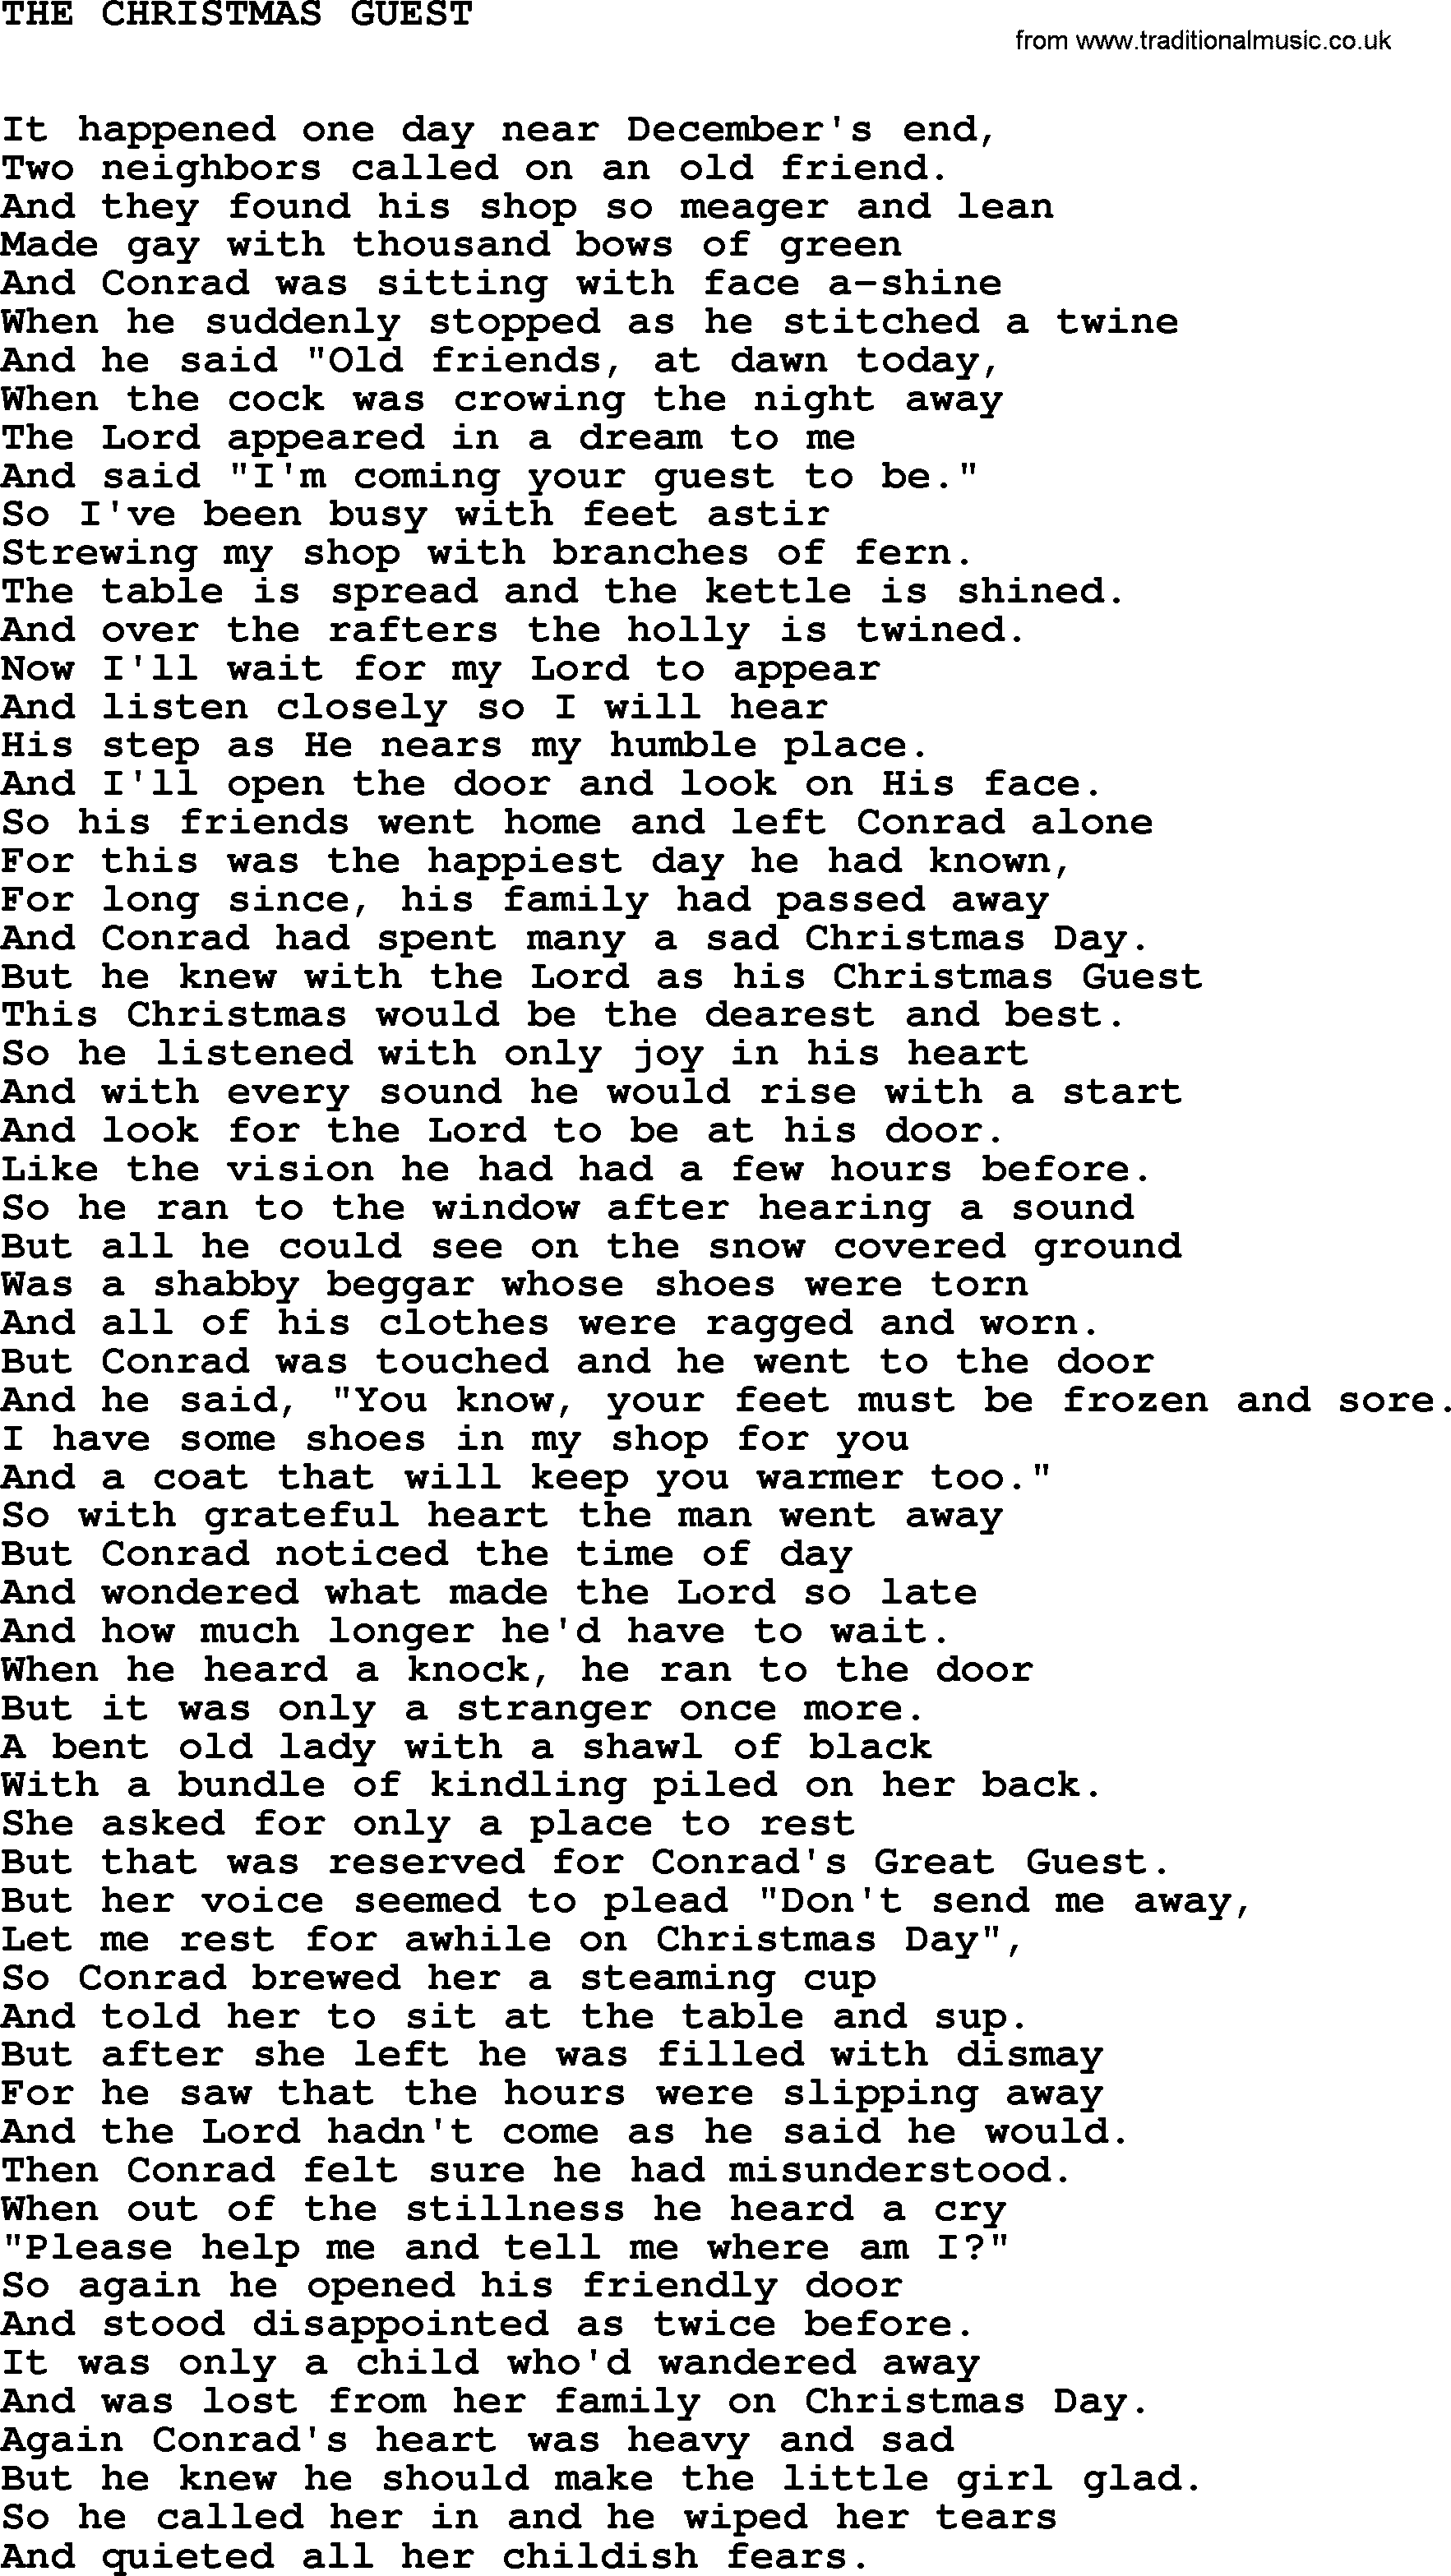 Johnny Cash song The Christmas Guest.txt lyrics